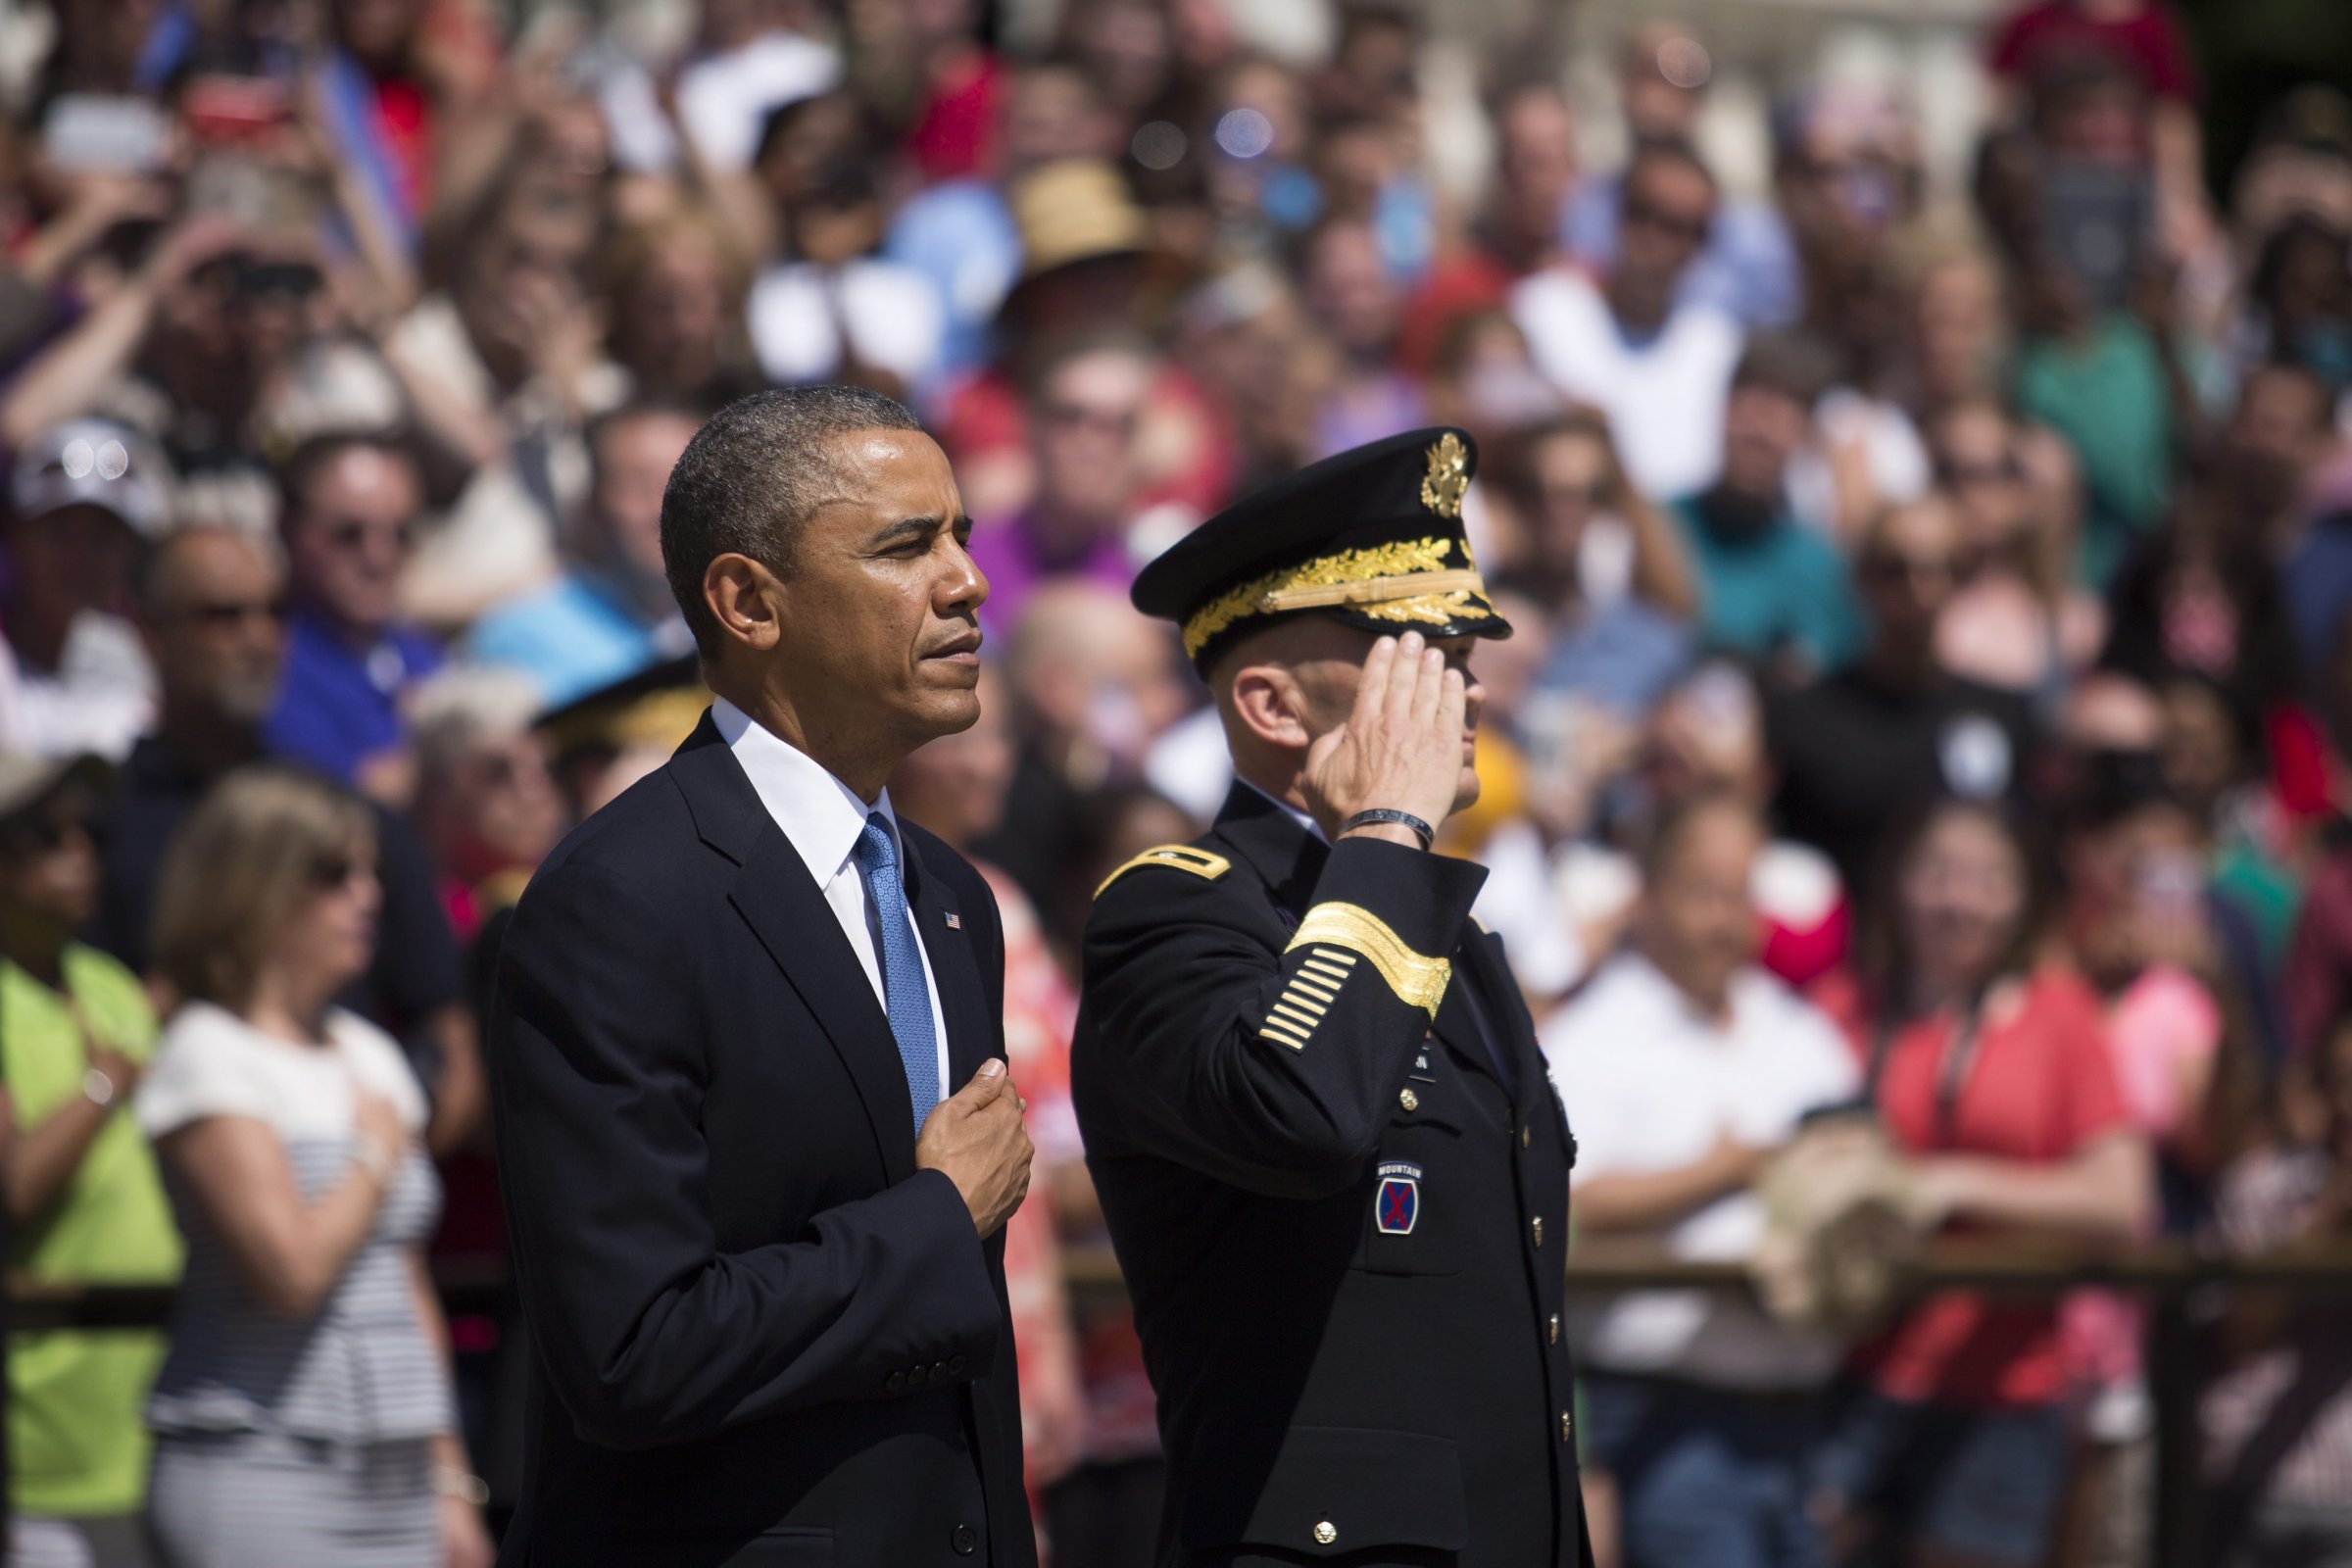 Barack Obama Veterans Memorial Day